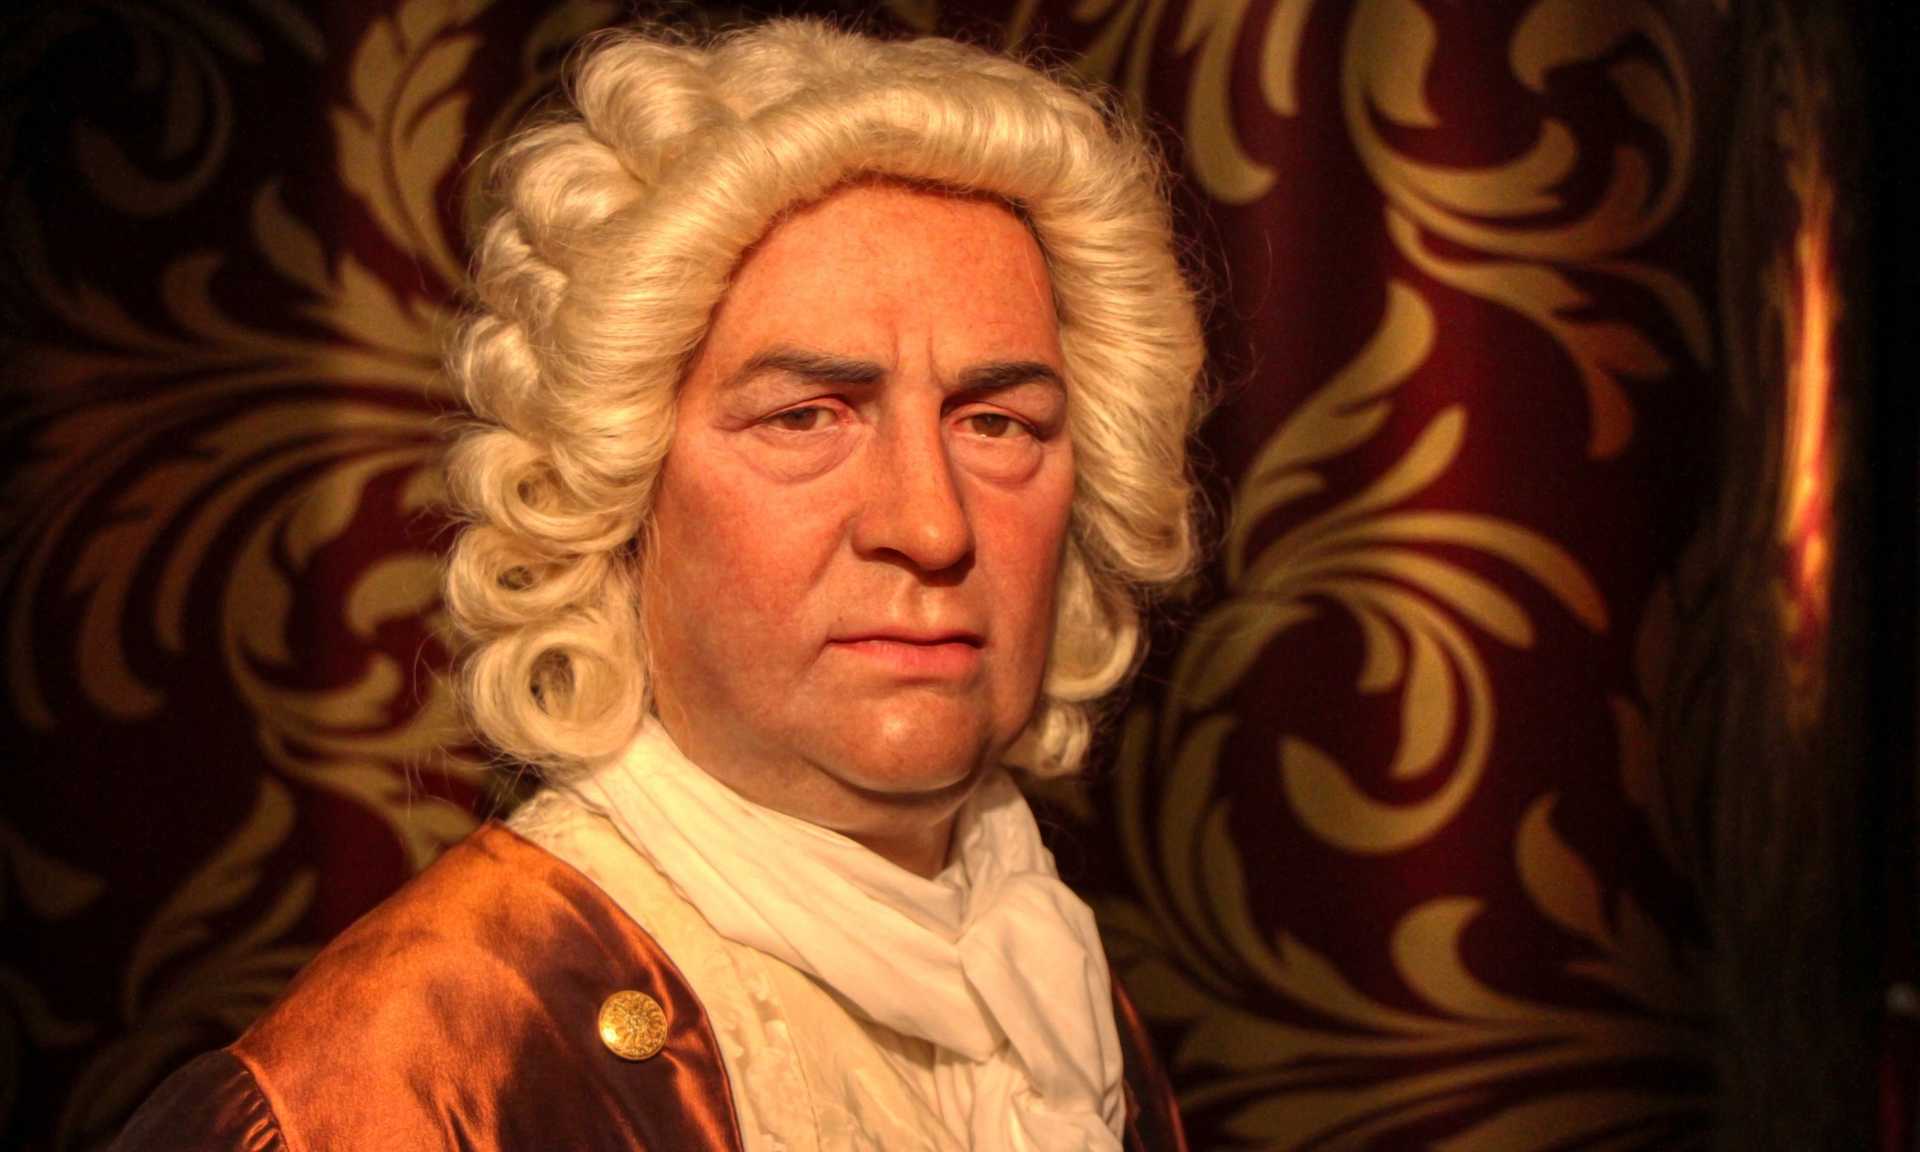 Johann Sebastian Bach, Komposer Visioner Yang Religius